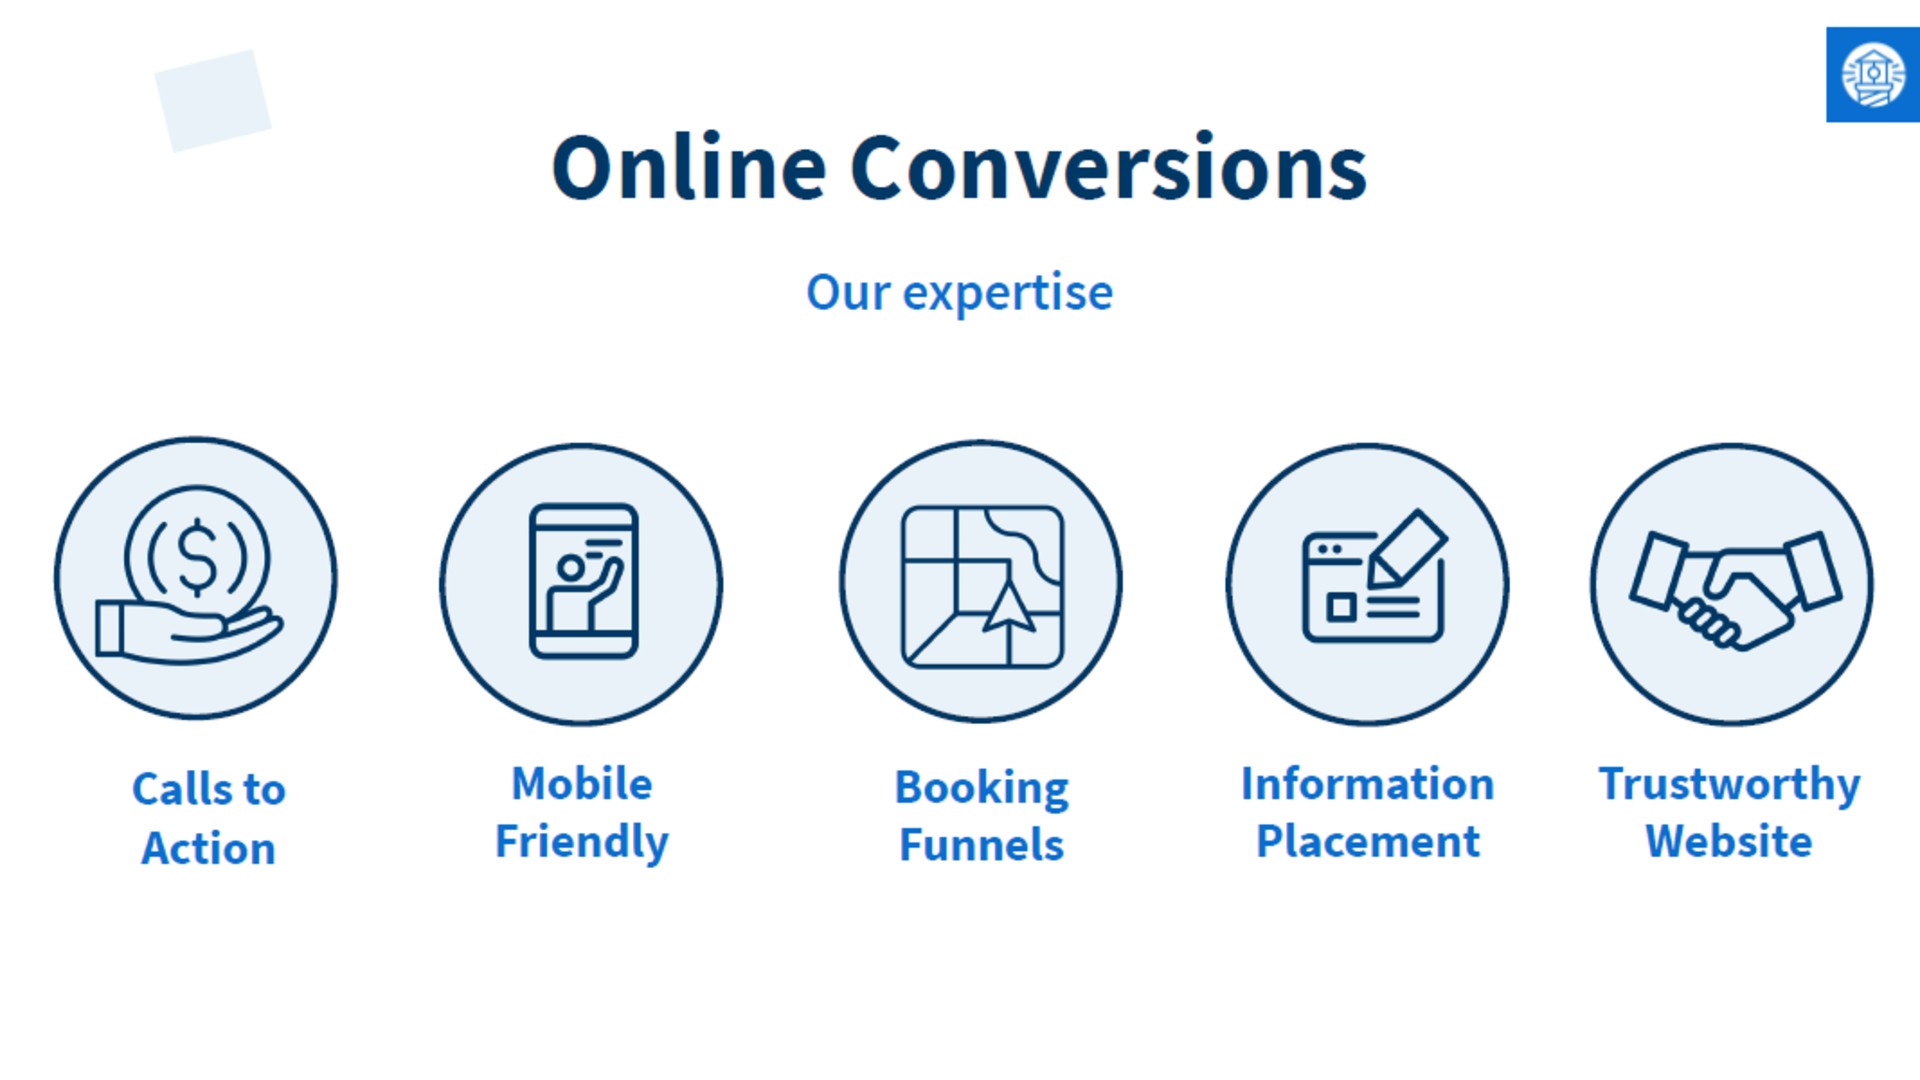 Online sales conversions with FareHarbor